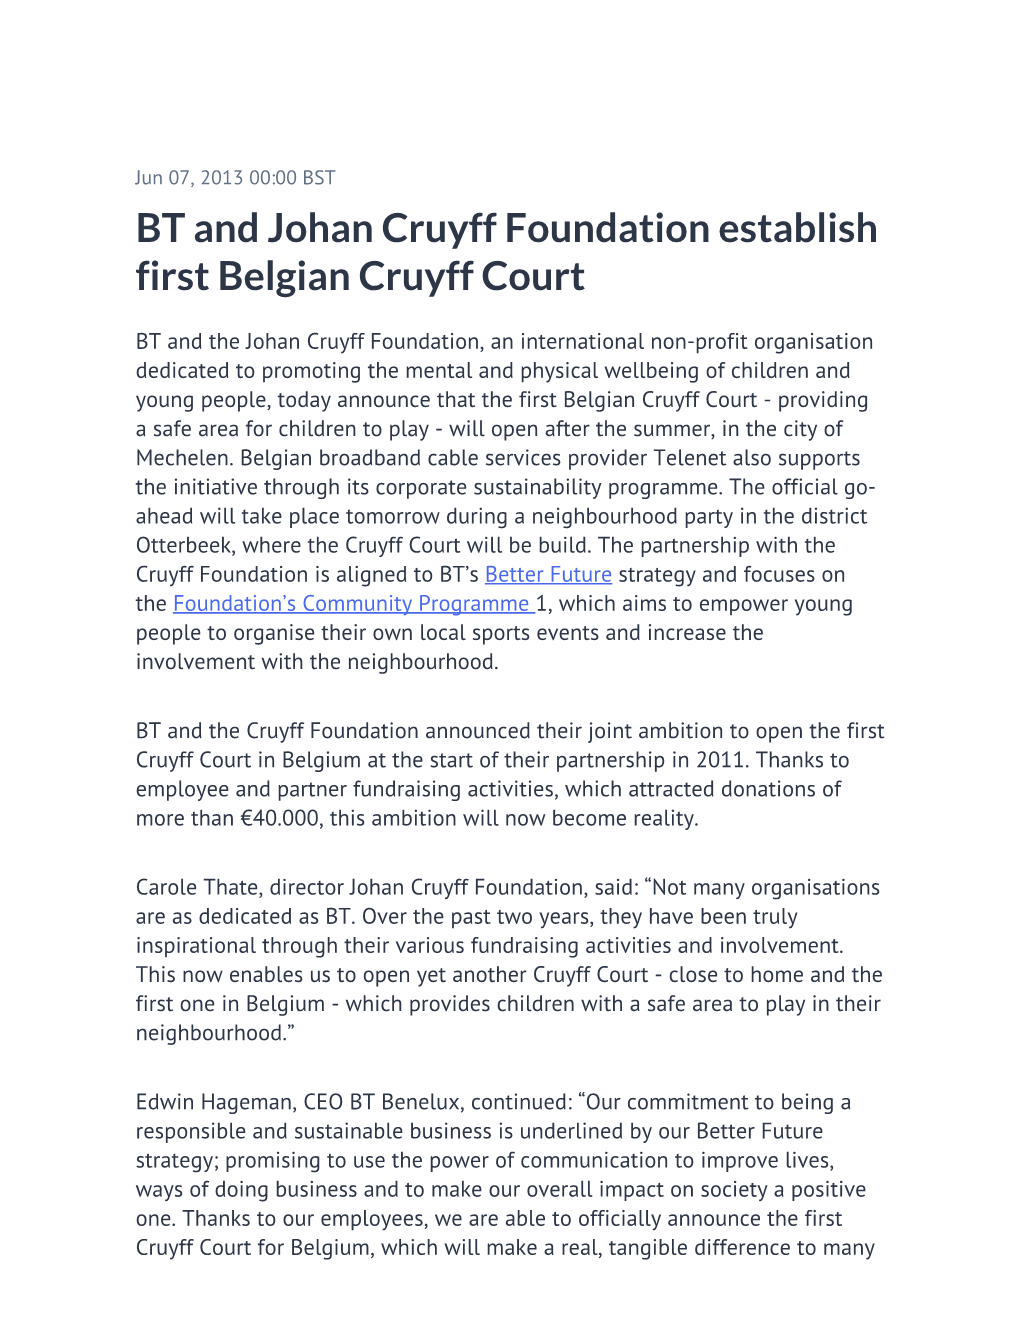 BT and Johan Cruyff Foundation Establish First Belgian Cruyff Court